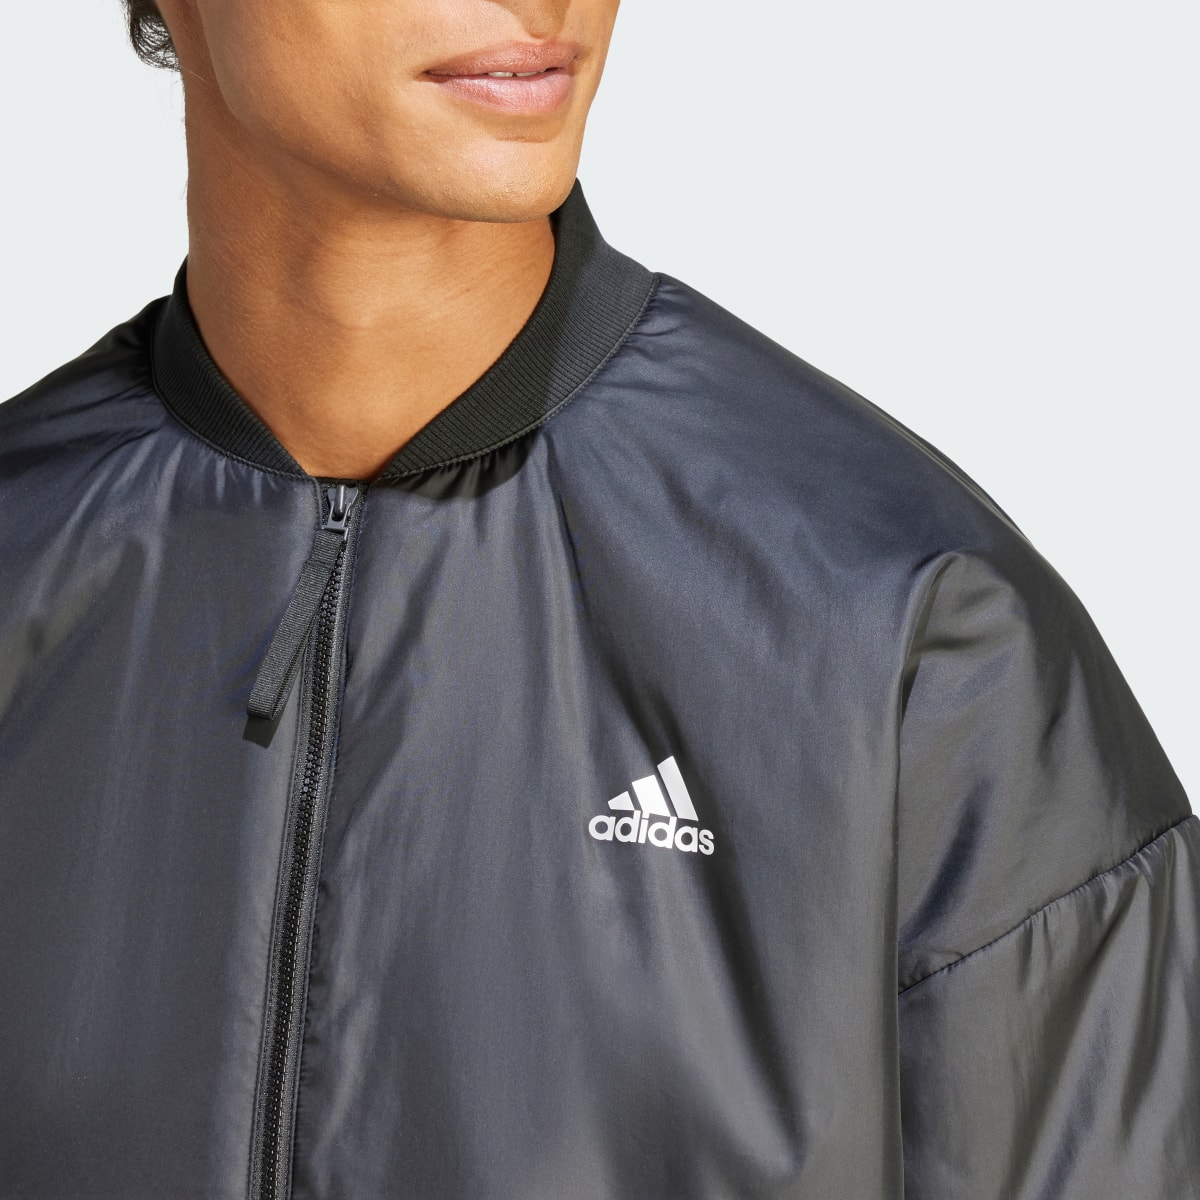 Adidas Brand Love Bomber Jacket. 7